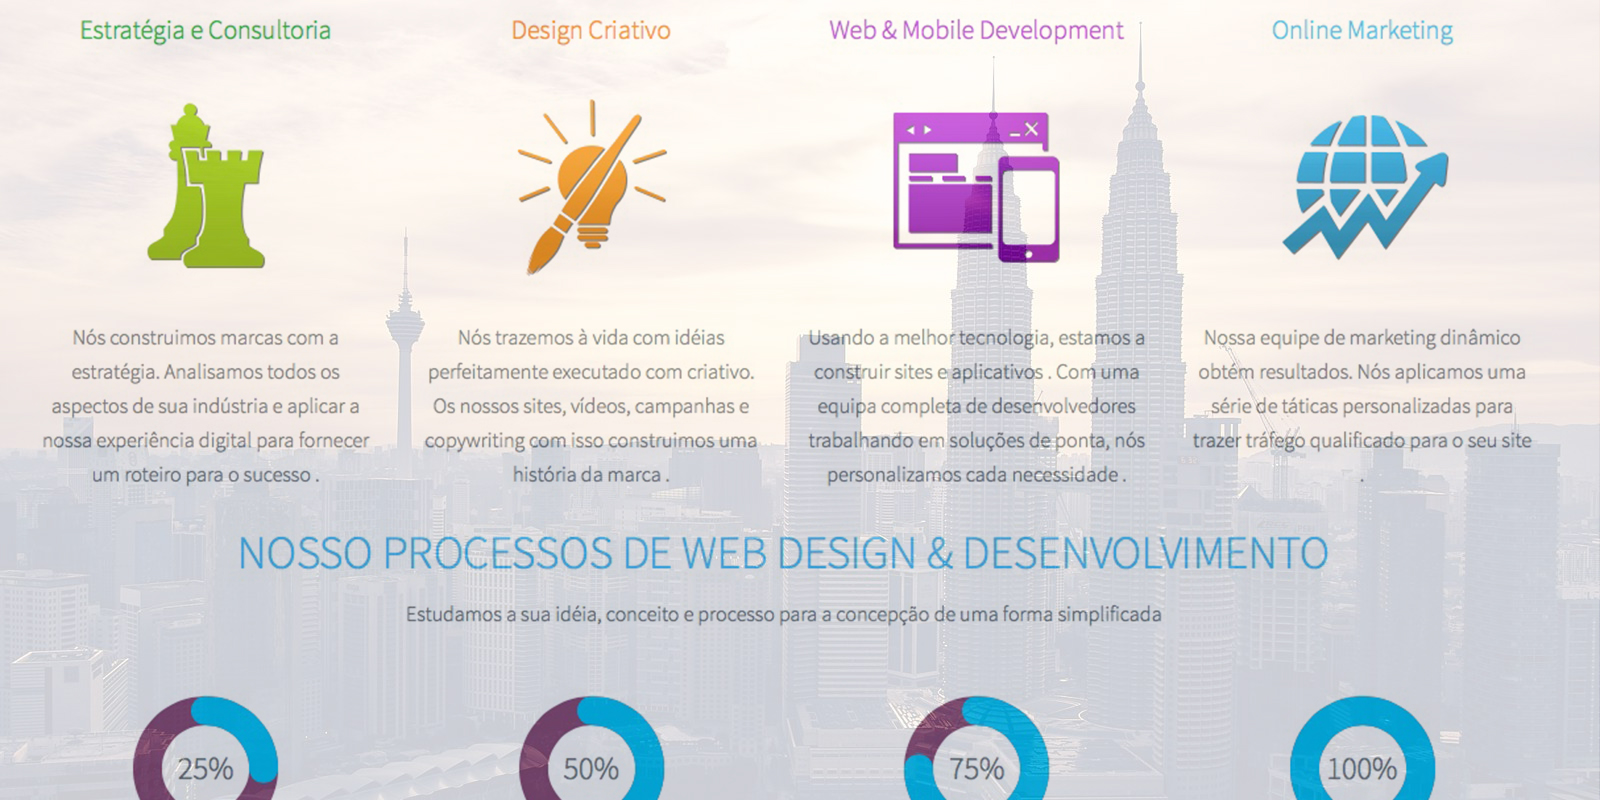 Website Design, Online Marketing, & Mobile App Development